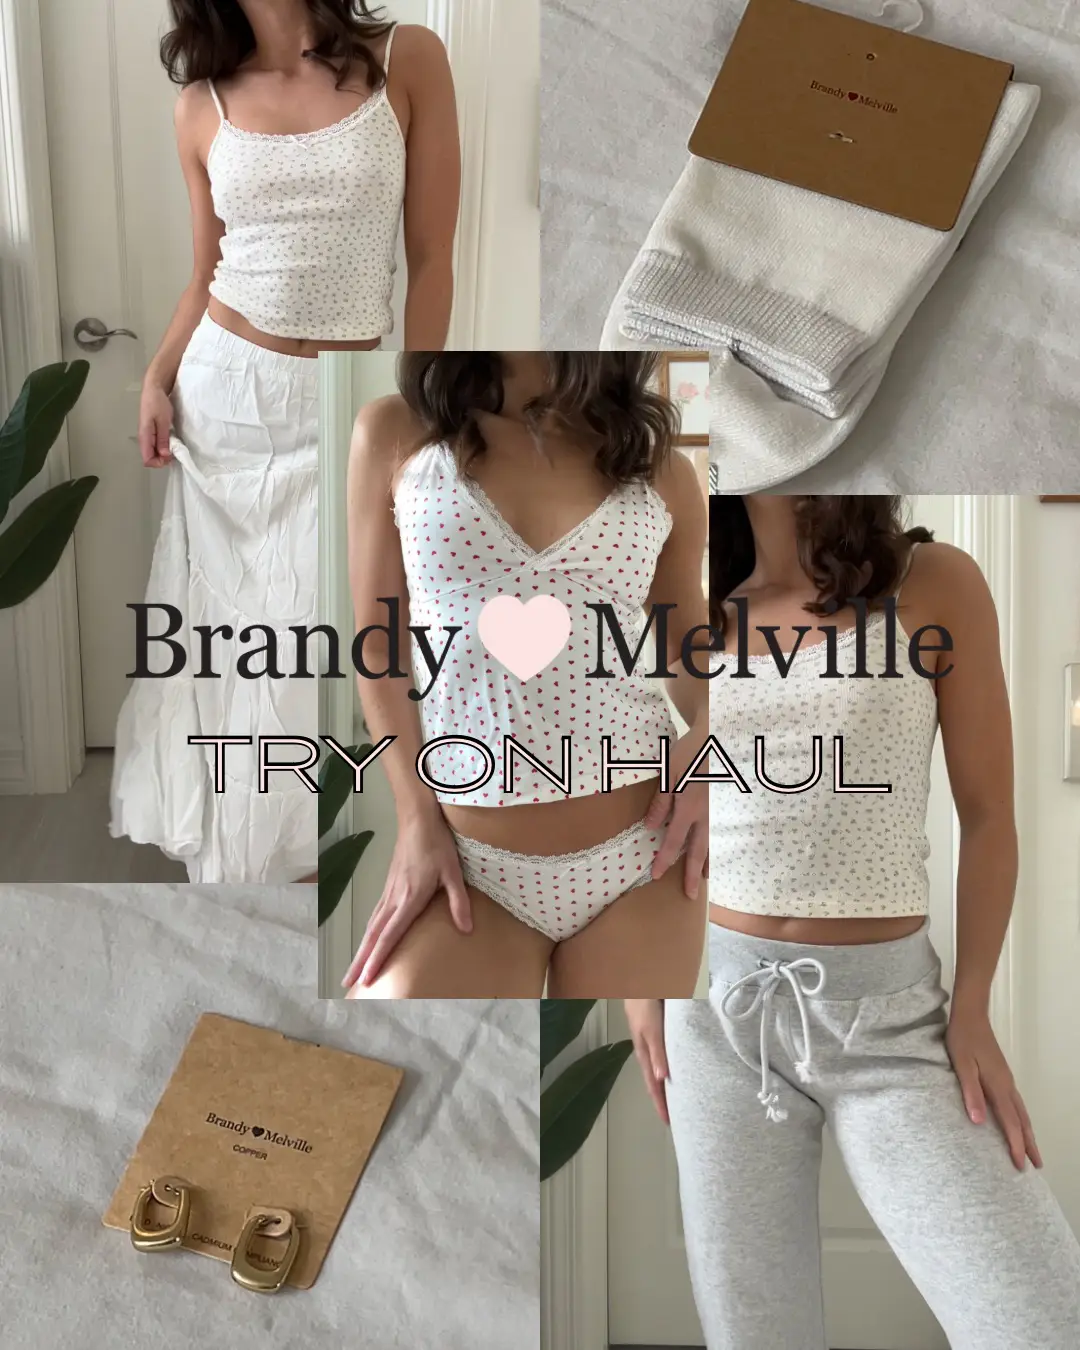 Brandy Melville Try-On haul video - Lemon8 Search